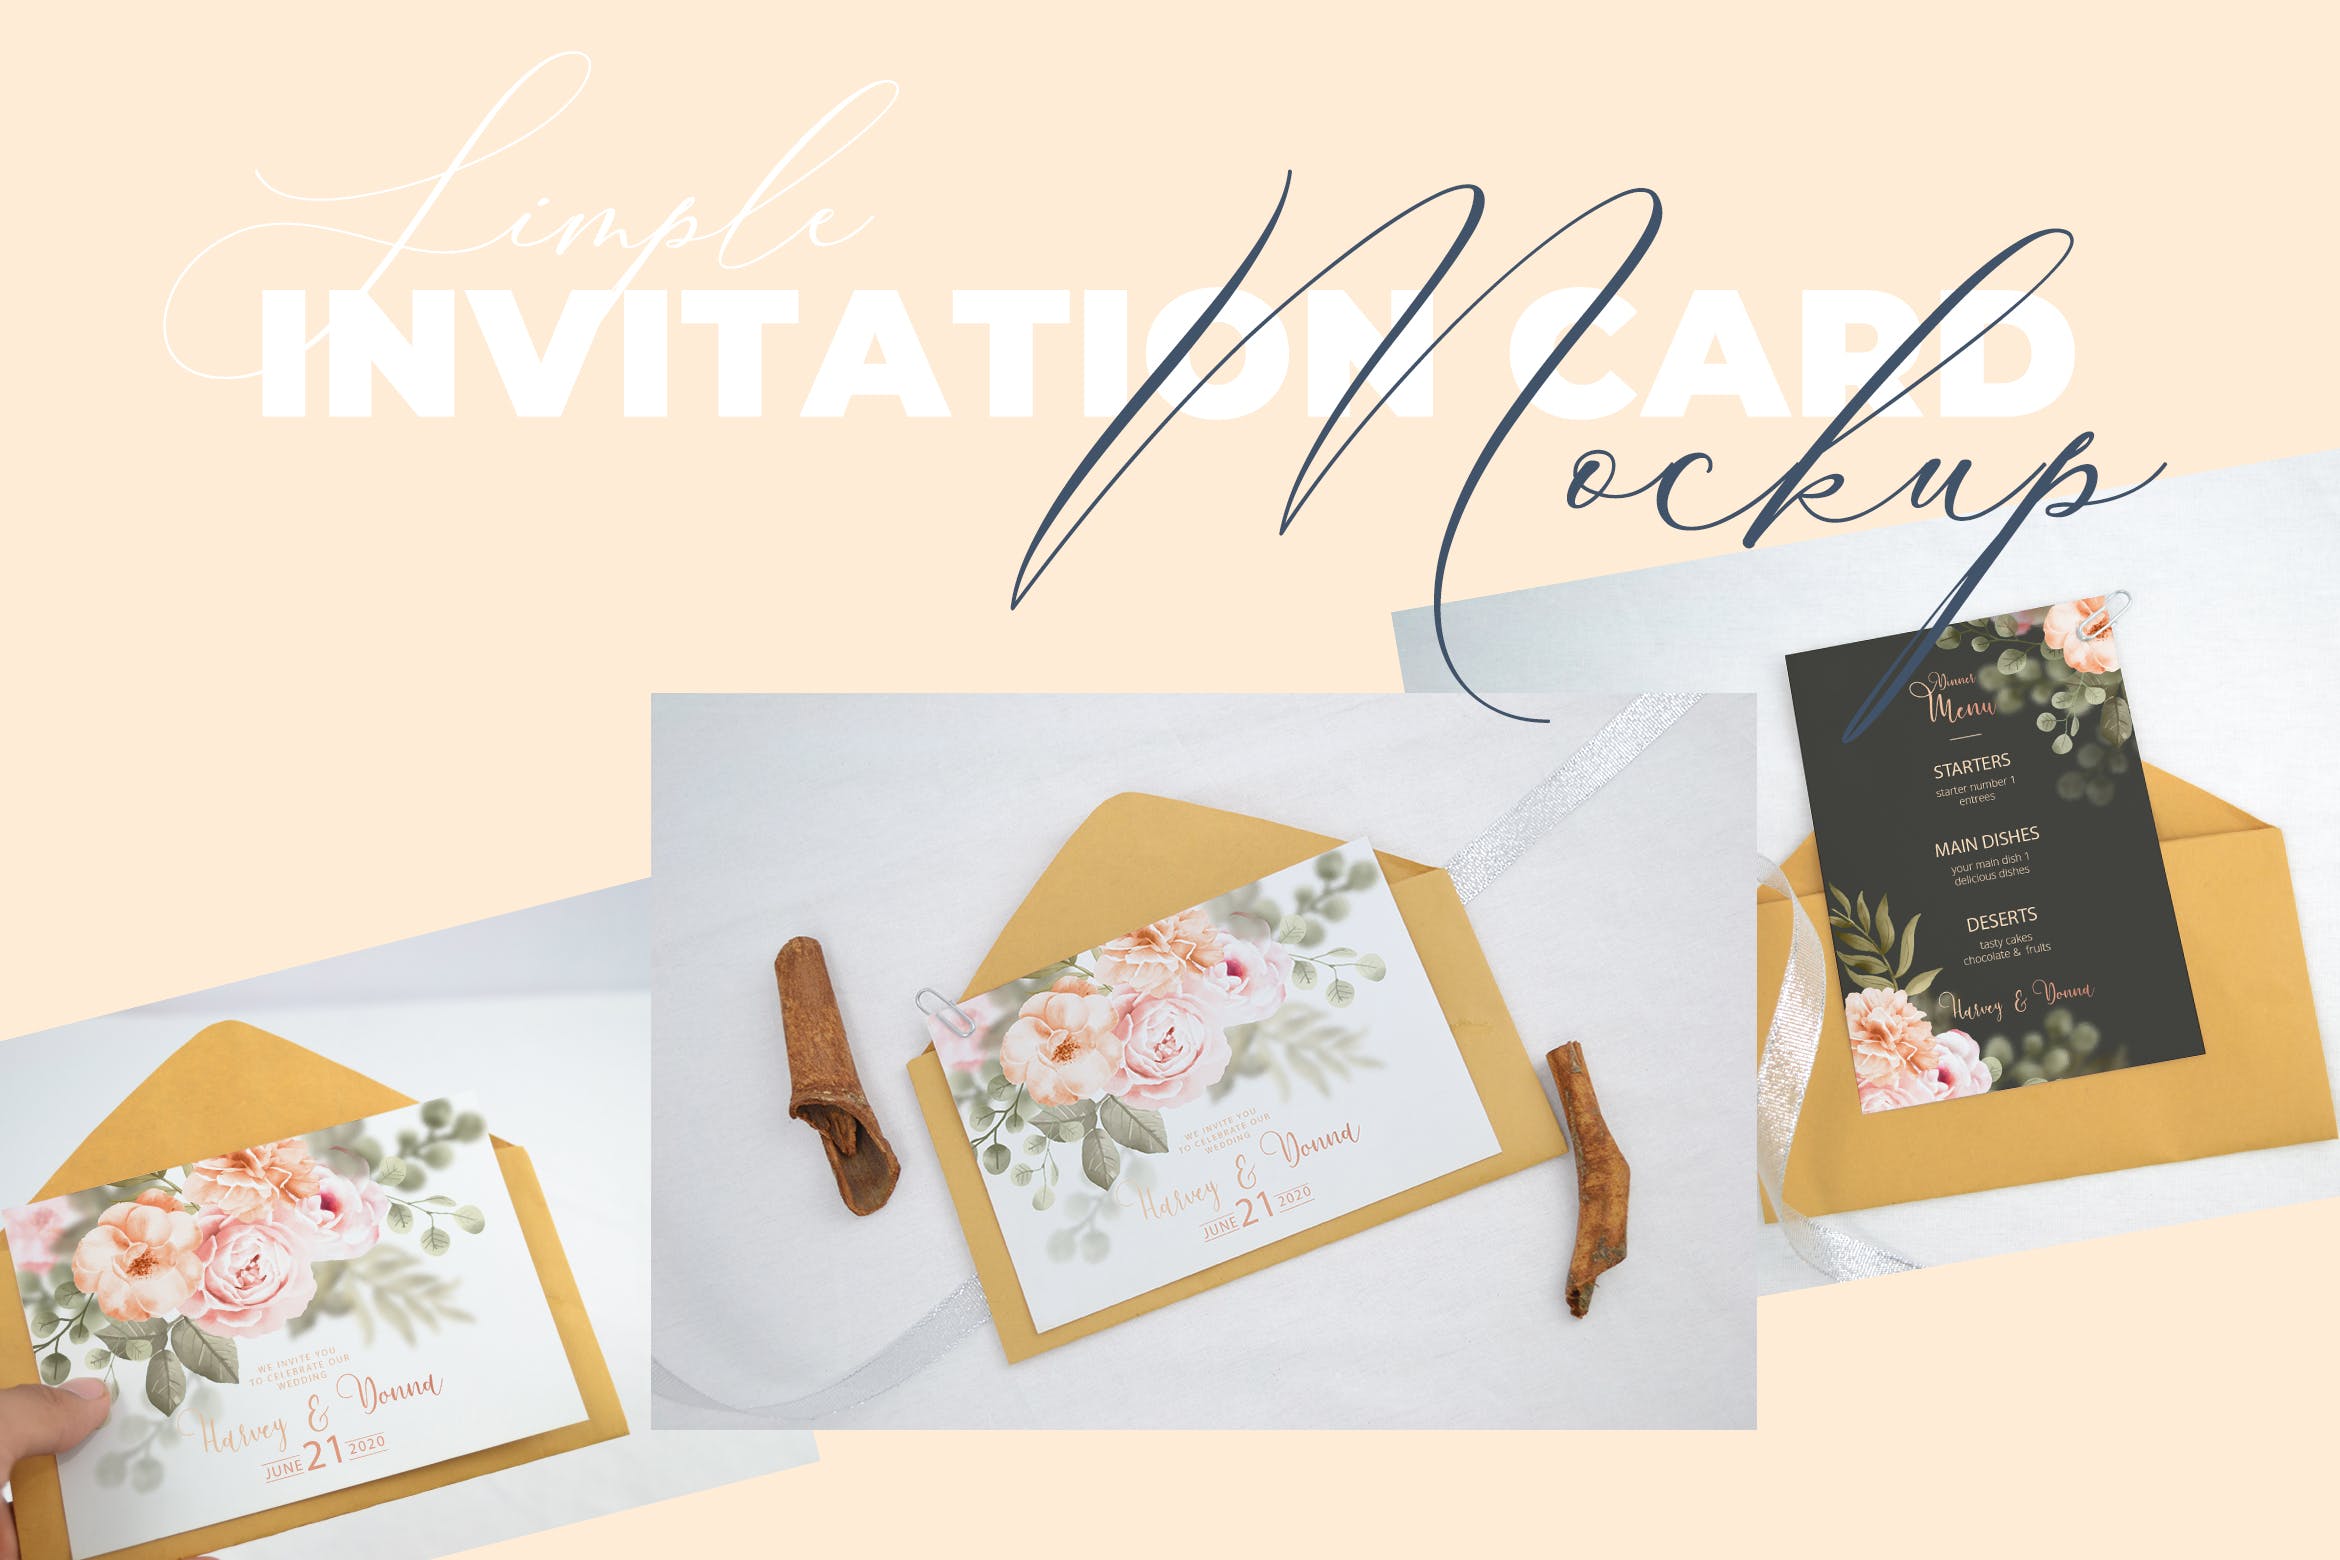 婚礼邀请函设计效果图样机第一素材精选模板v2 Realistic Wedding Invitation Card Mockup V2插图